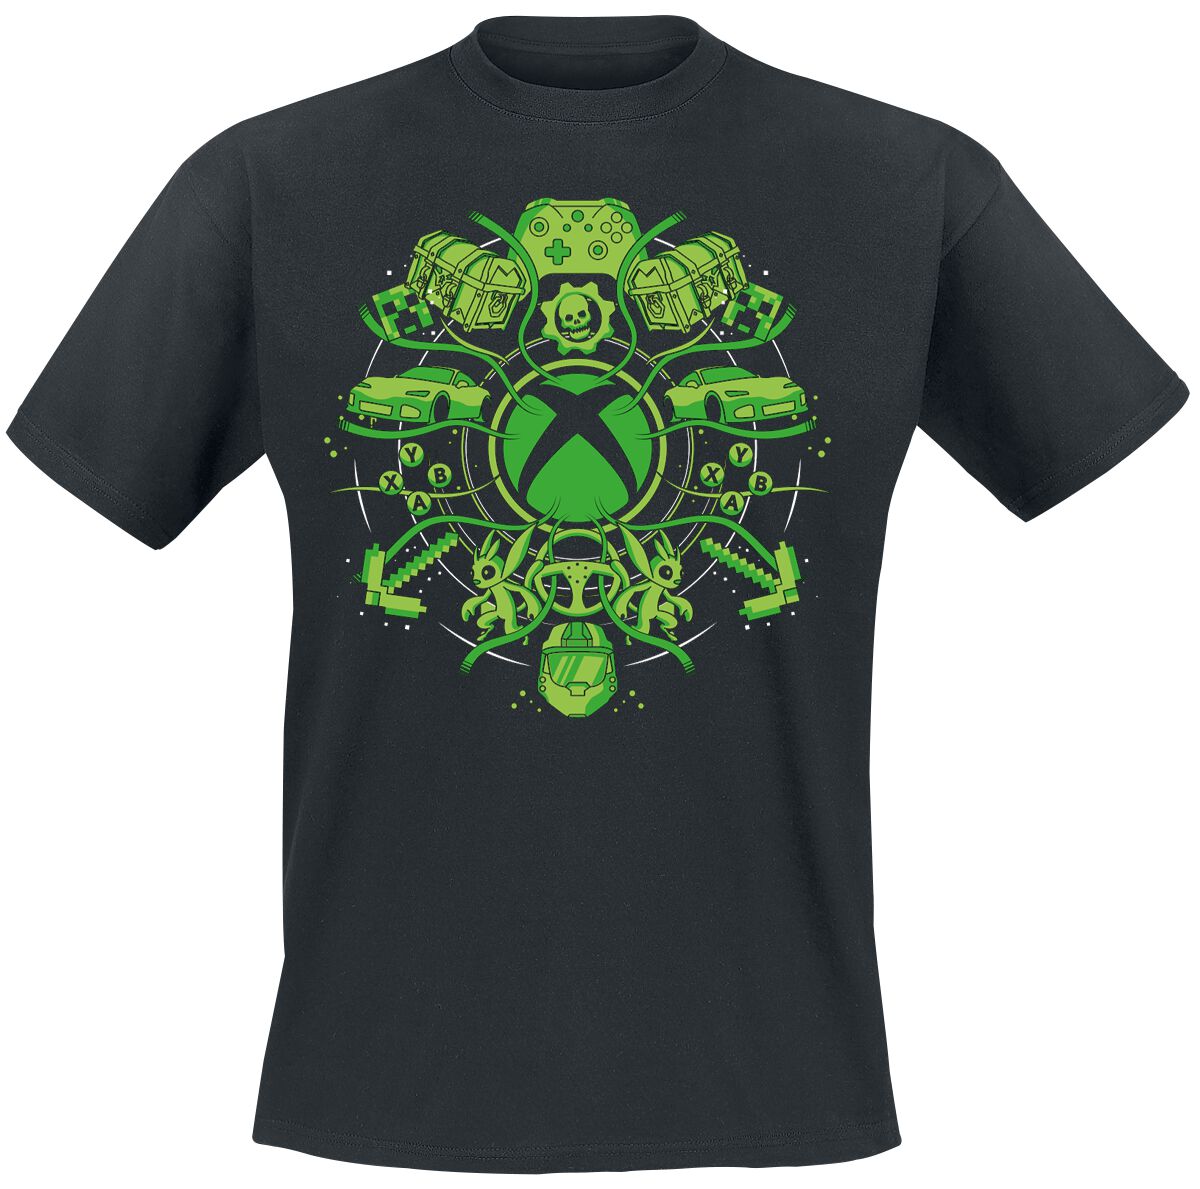 Xbox Illustrated Icons T-Shirt black